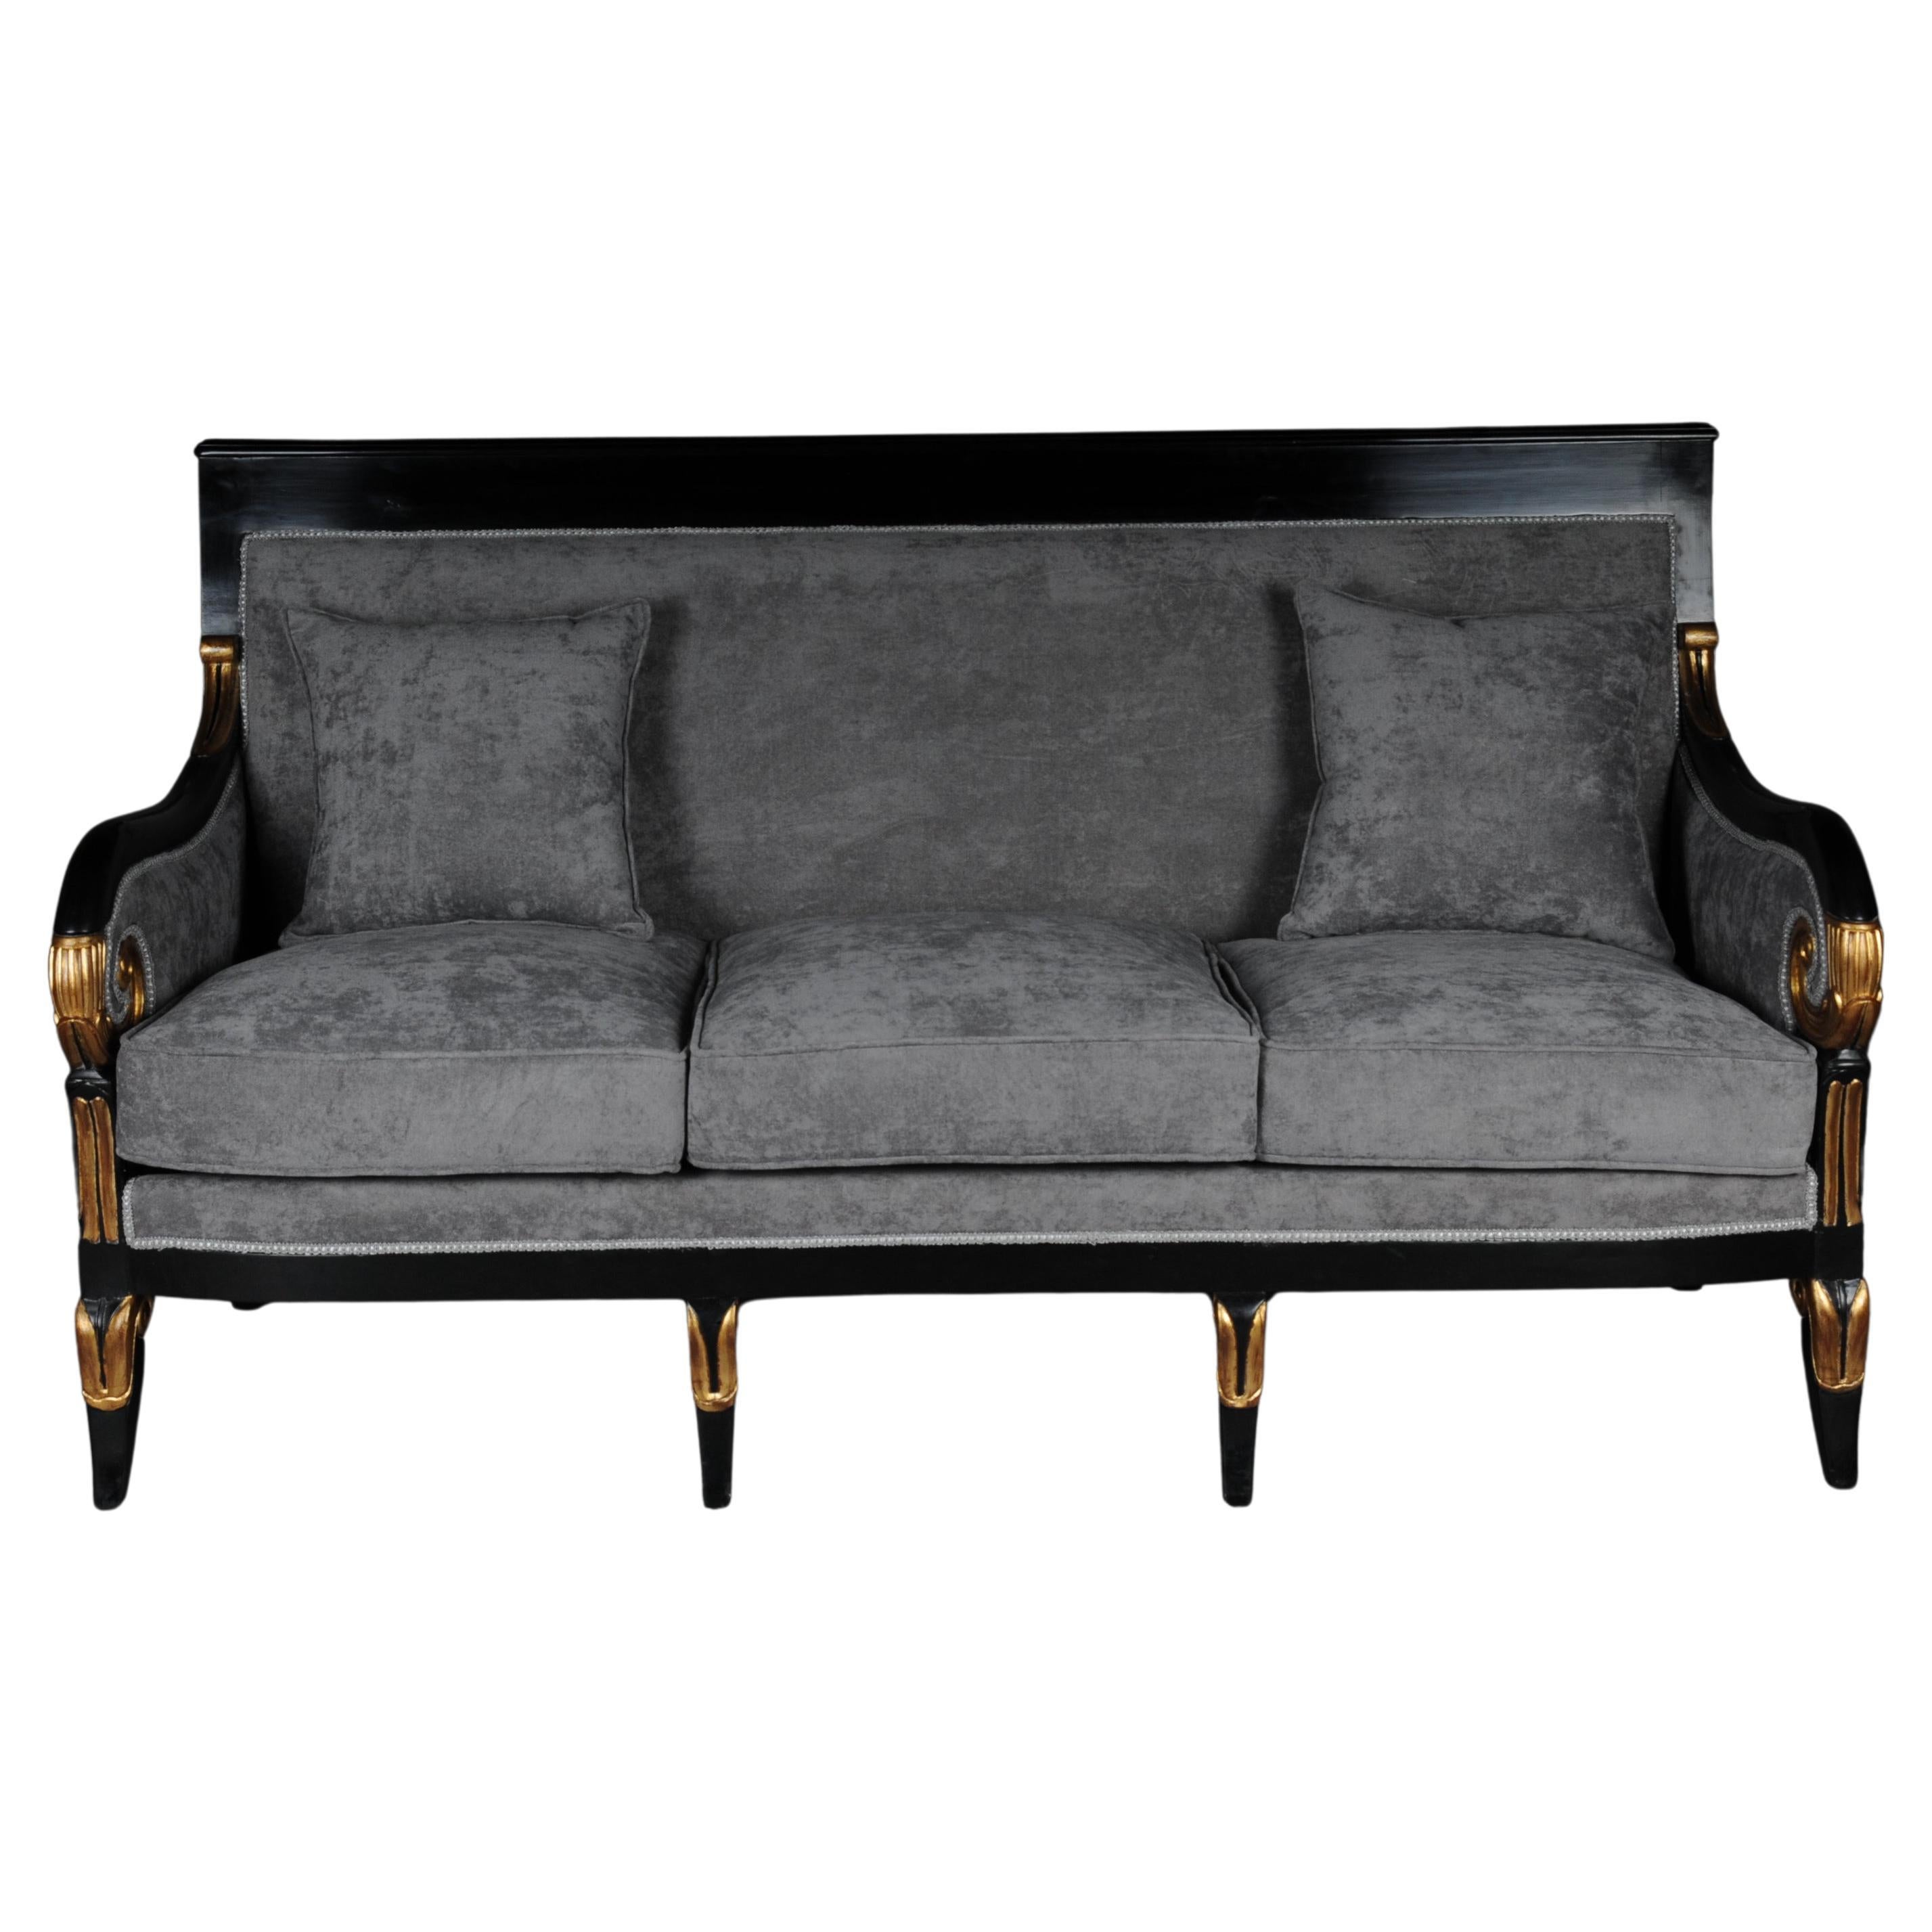 20th Century French Empire Salon Sofa/Couch, Black For Sale